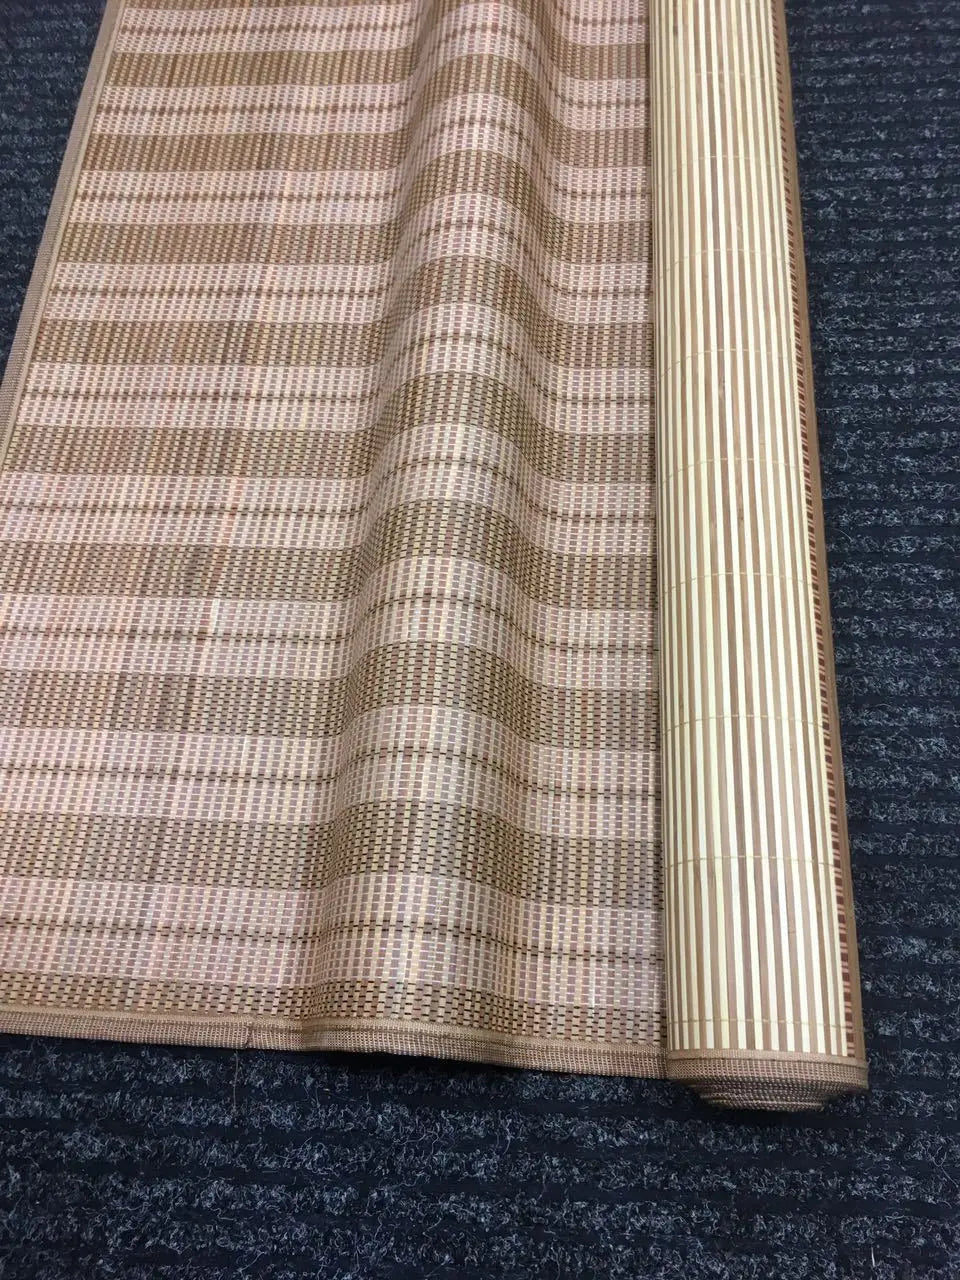 Bamboo sleeping mat foldable both size sheet rug floor mat wall 双面折叠金砖系列竹席凉席 everythingbamboo